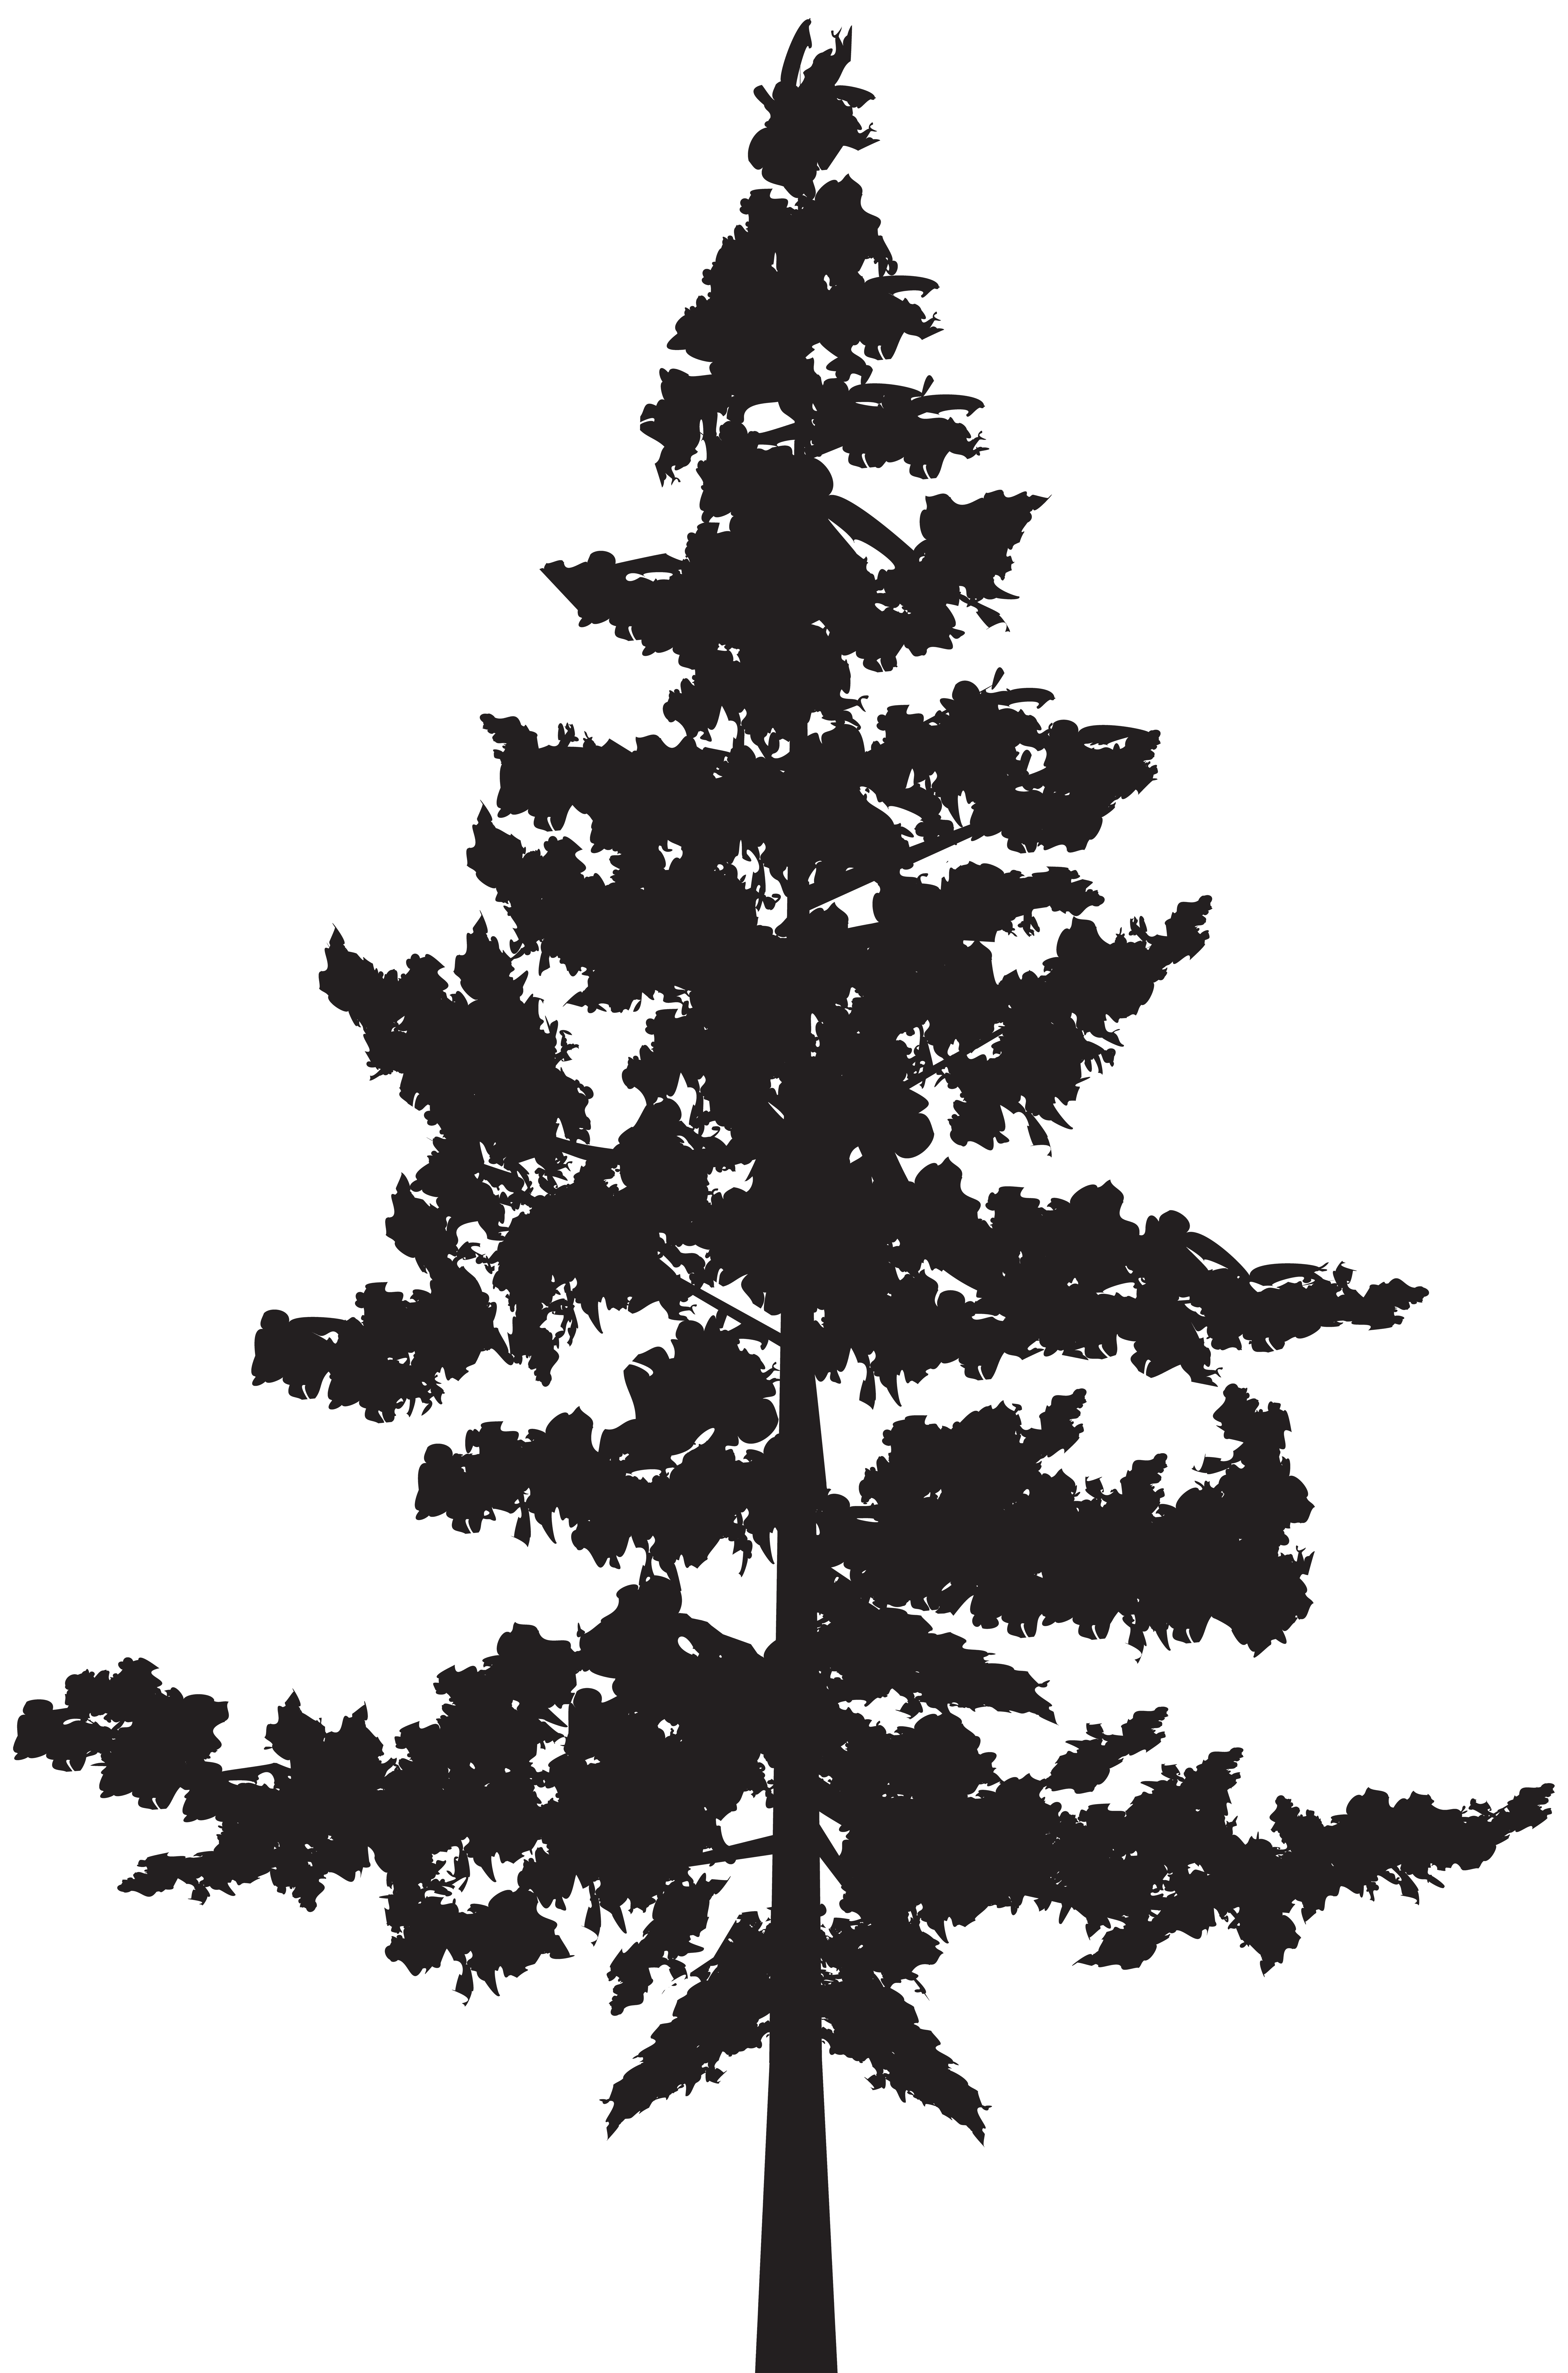 Black pine Tree Pinus contorta - Tree PNG Silhouette Clip Art Image png